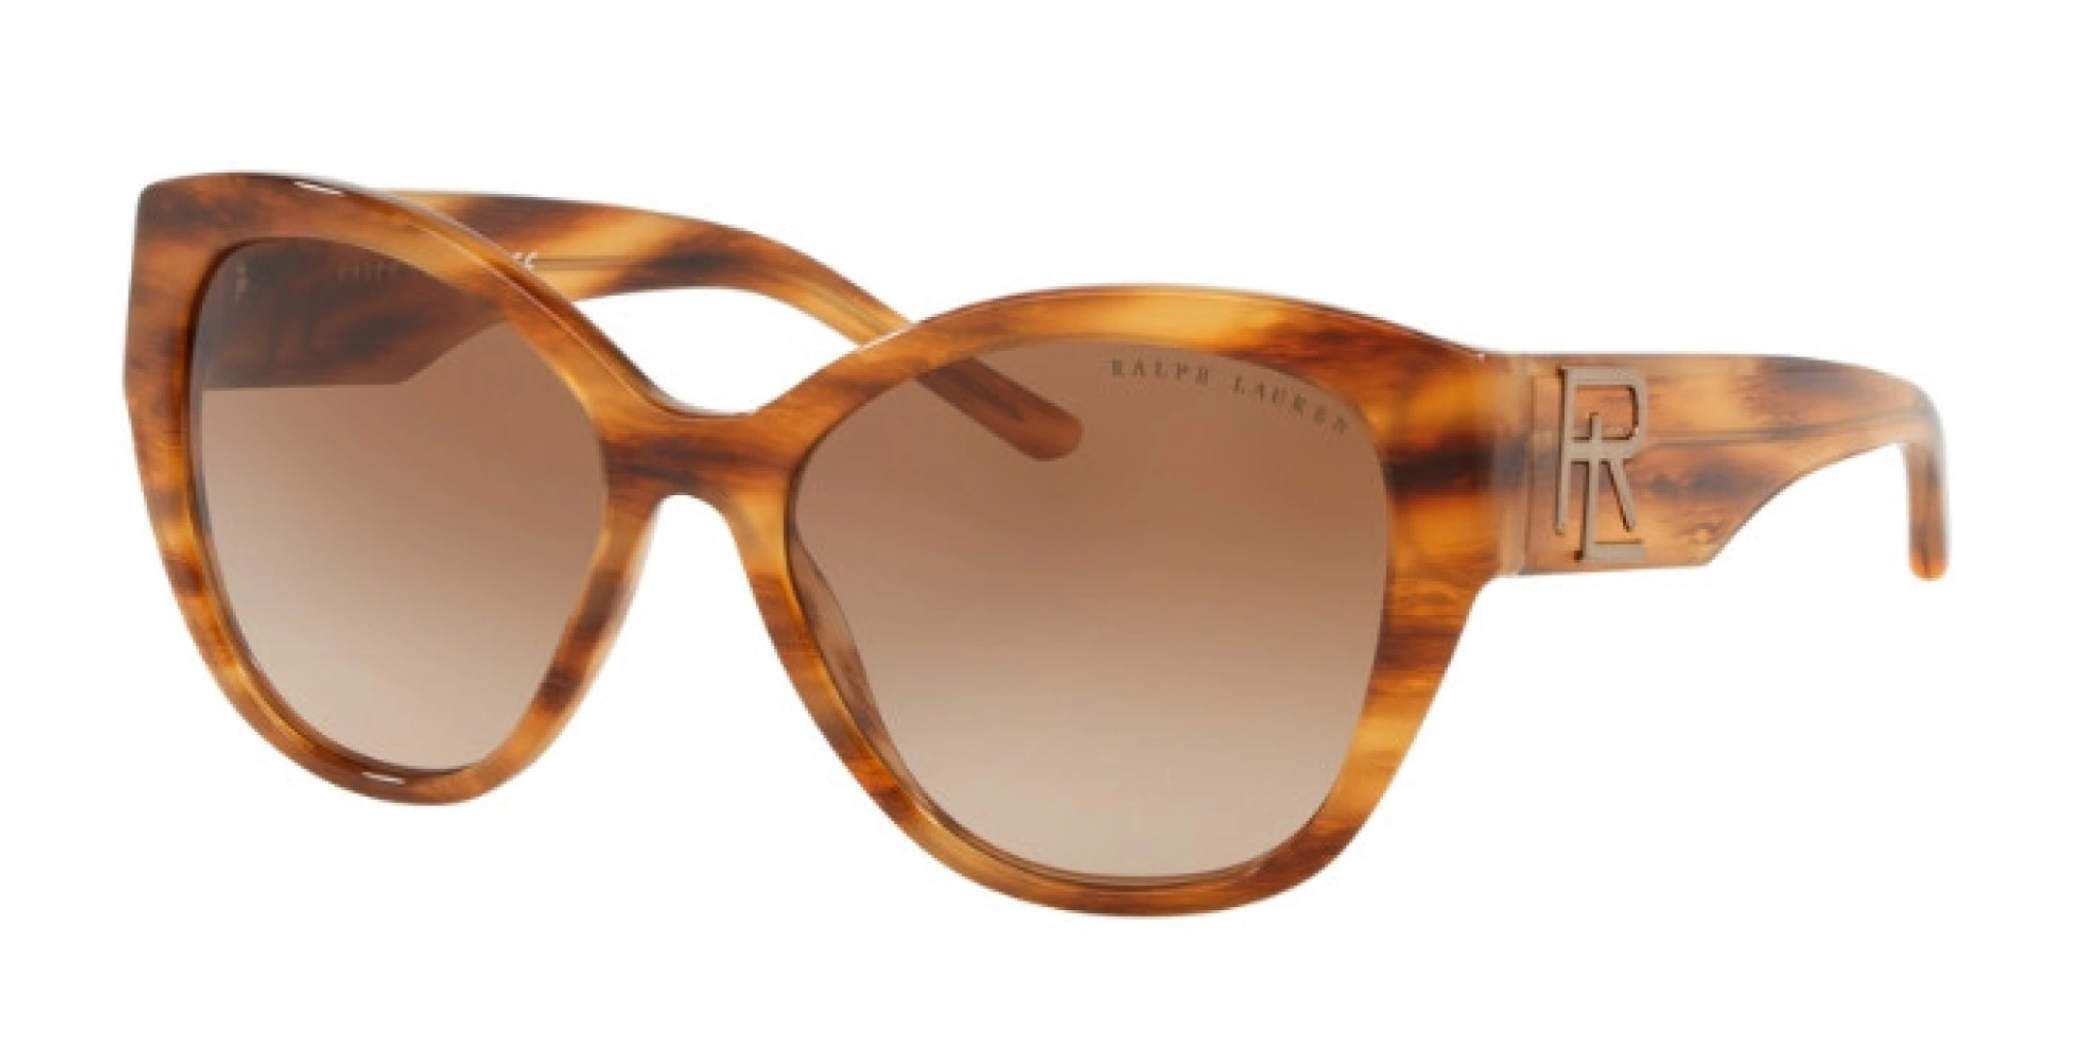 Ralph Lauren Women's Sunglasses Butterfly Tortoise RL8168 570313